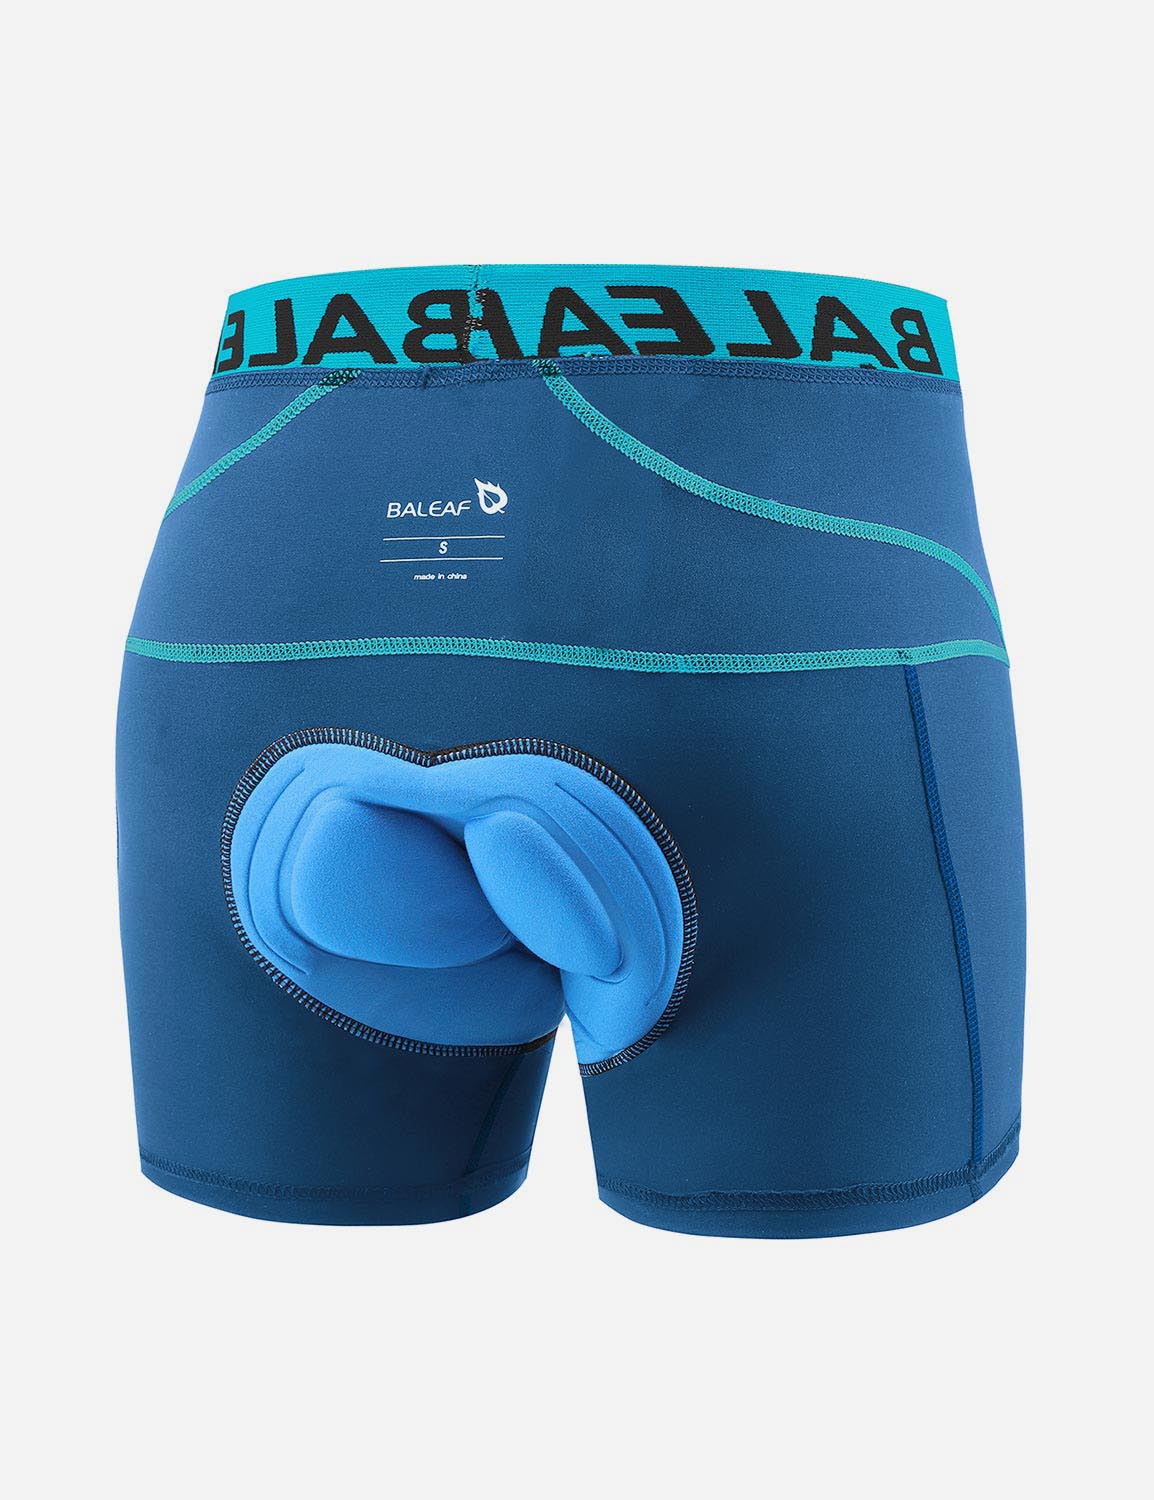  BALEAF Men's 3D Padded Bike Shorts Cycling Underwear